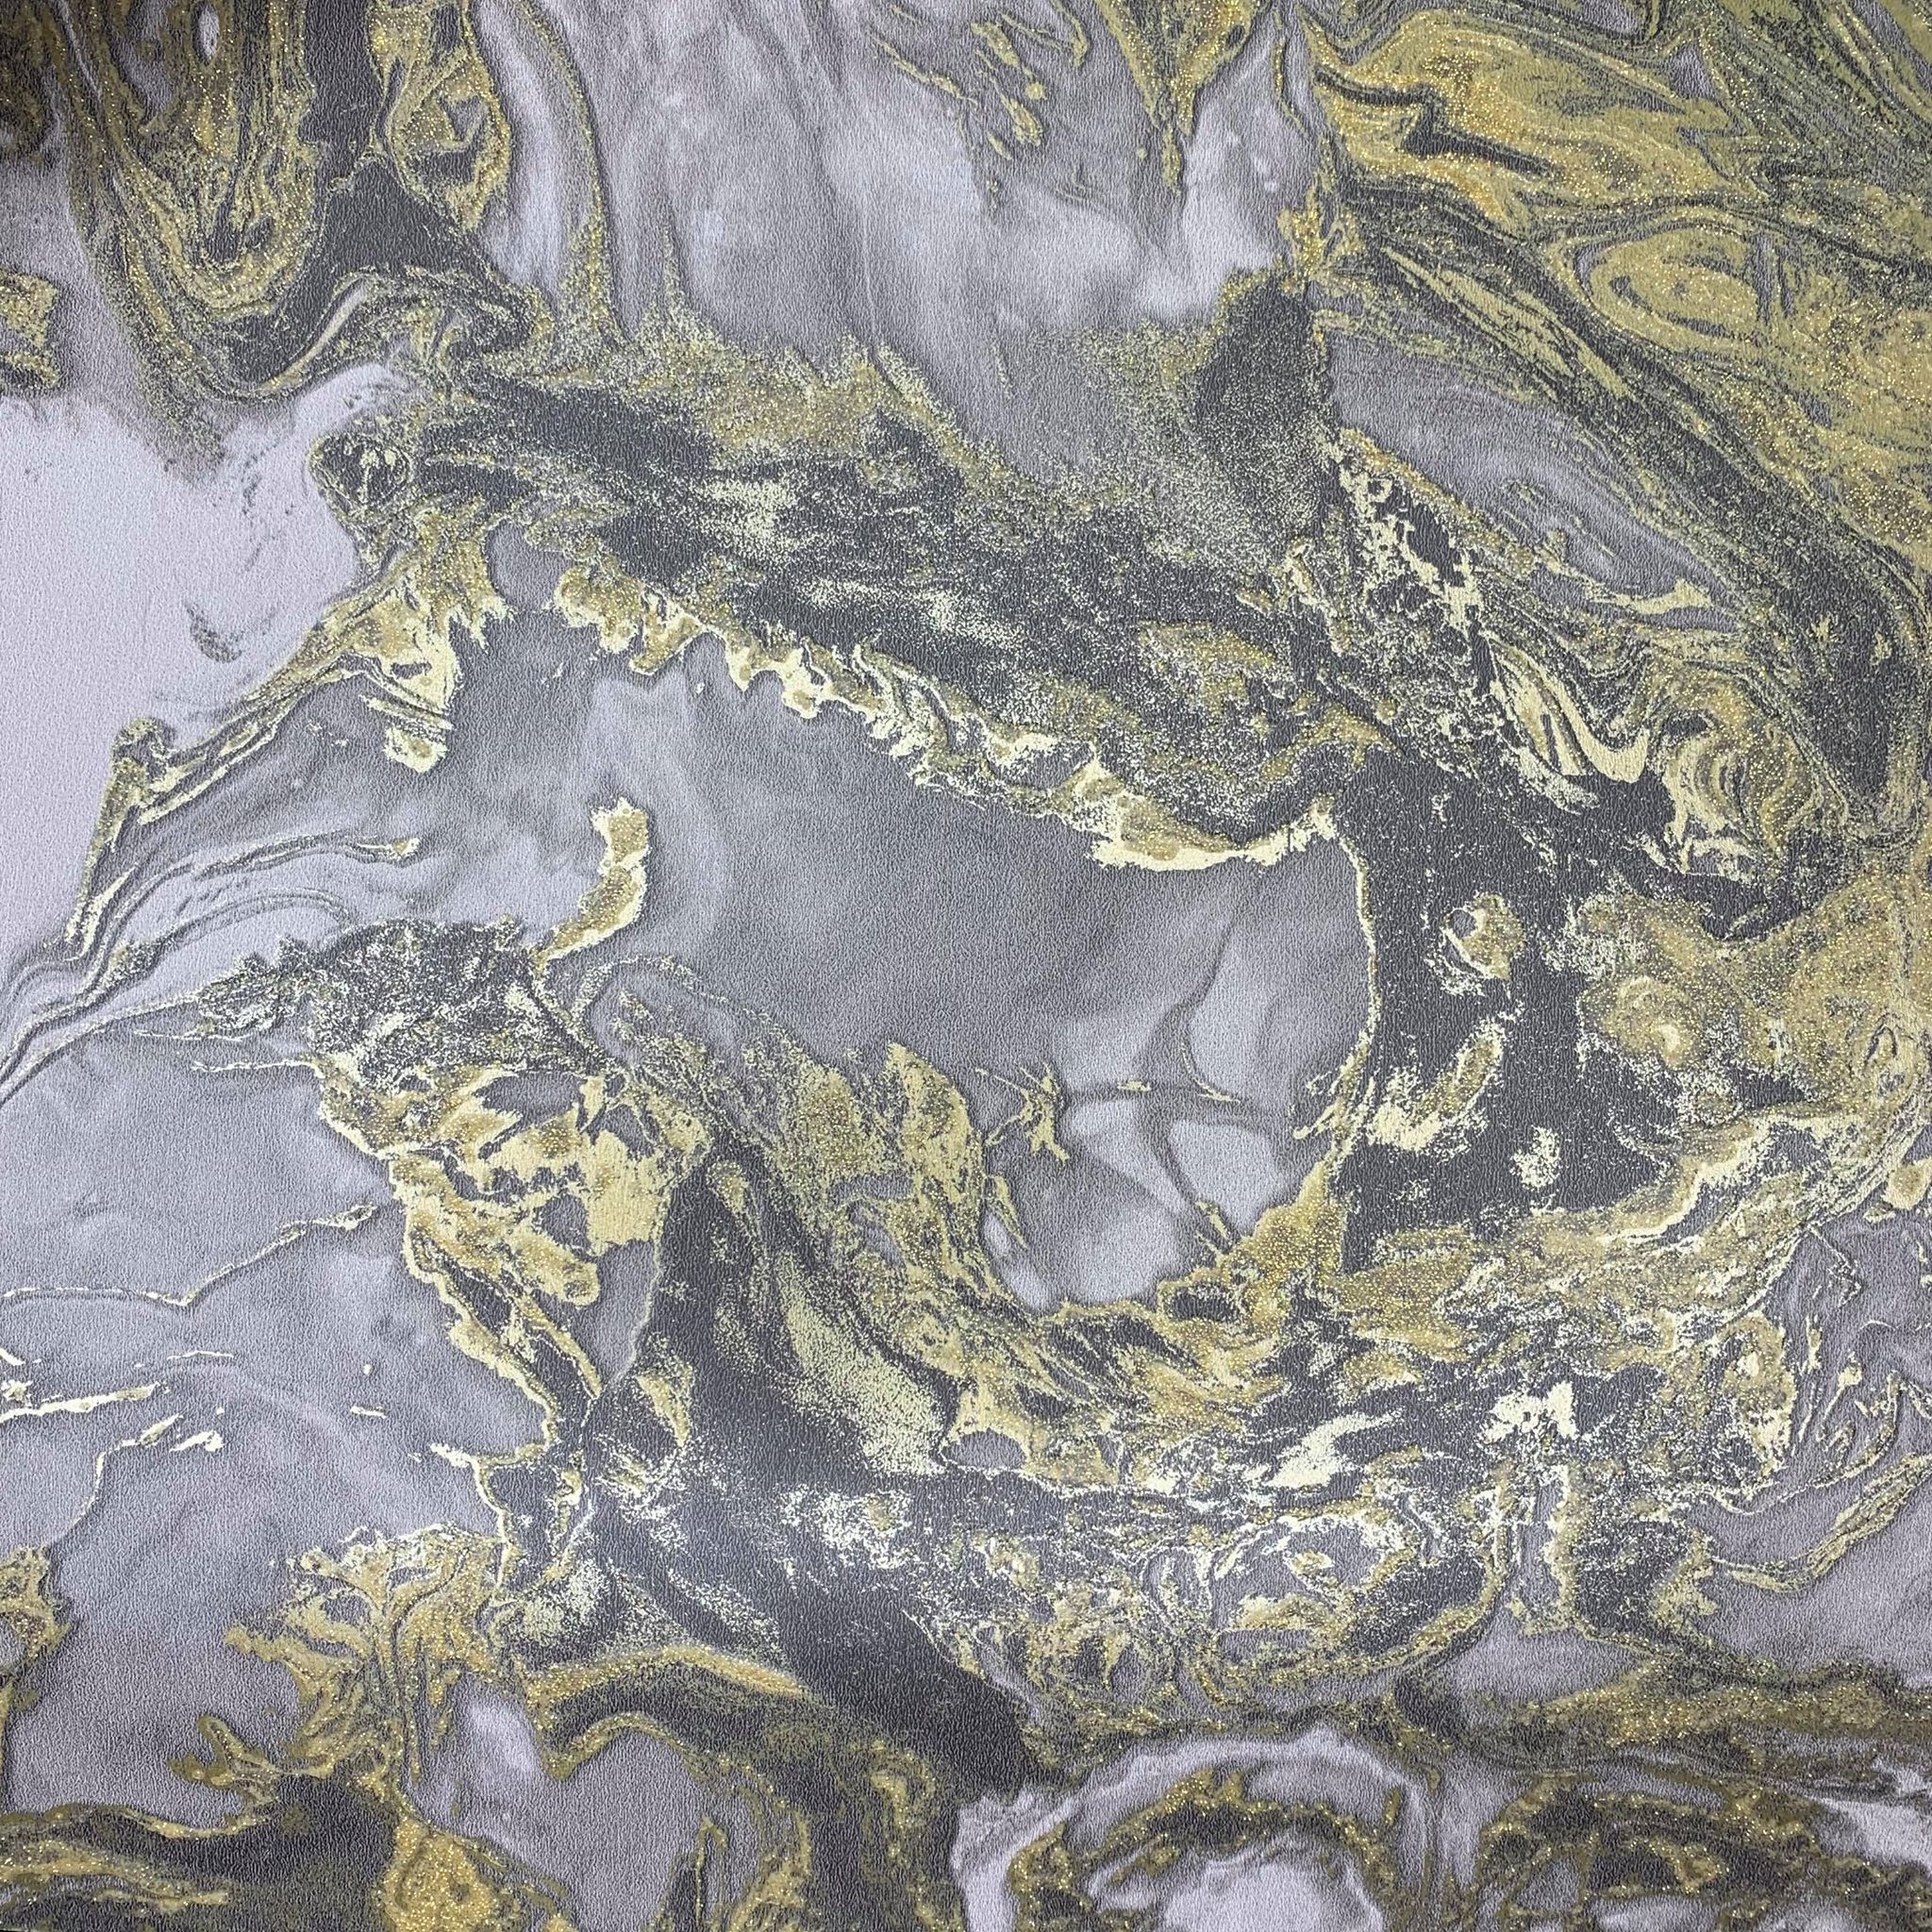 Liquid Marble Wallpapers